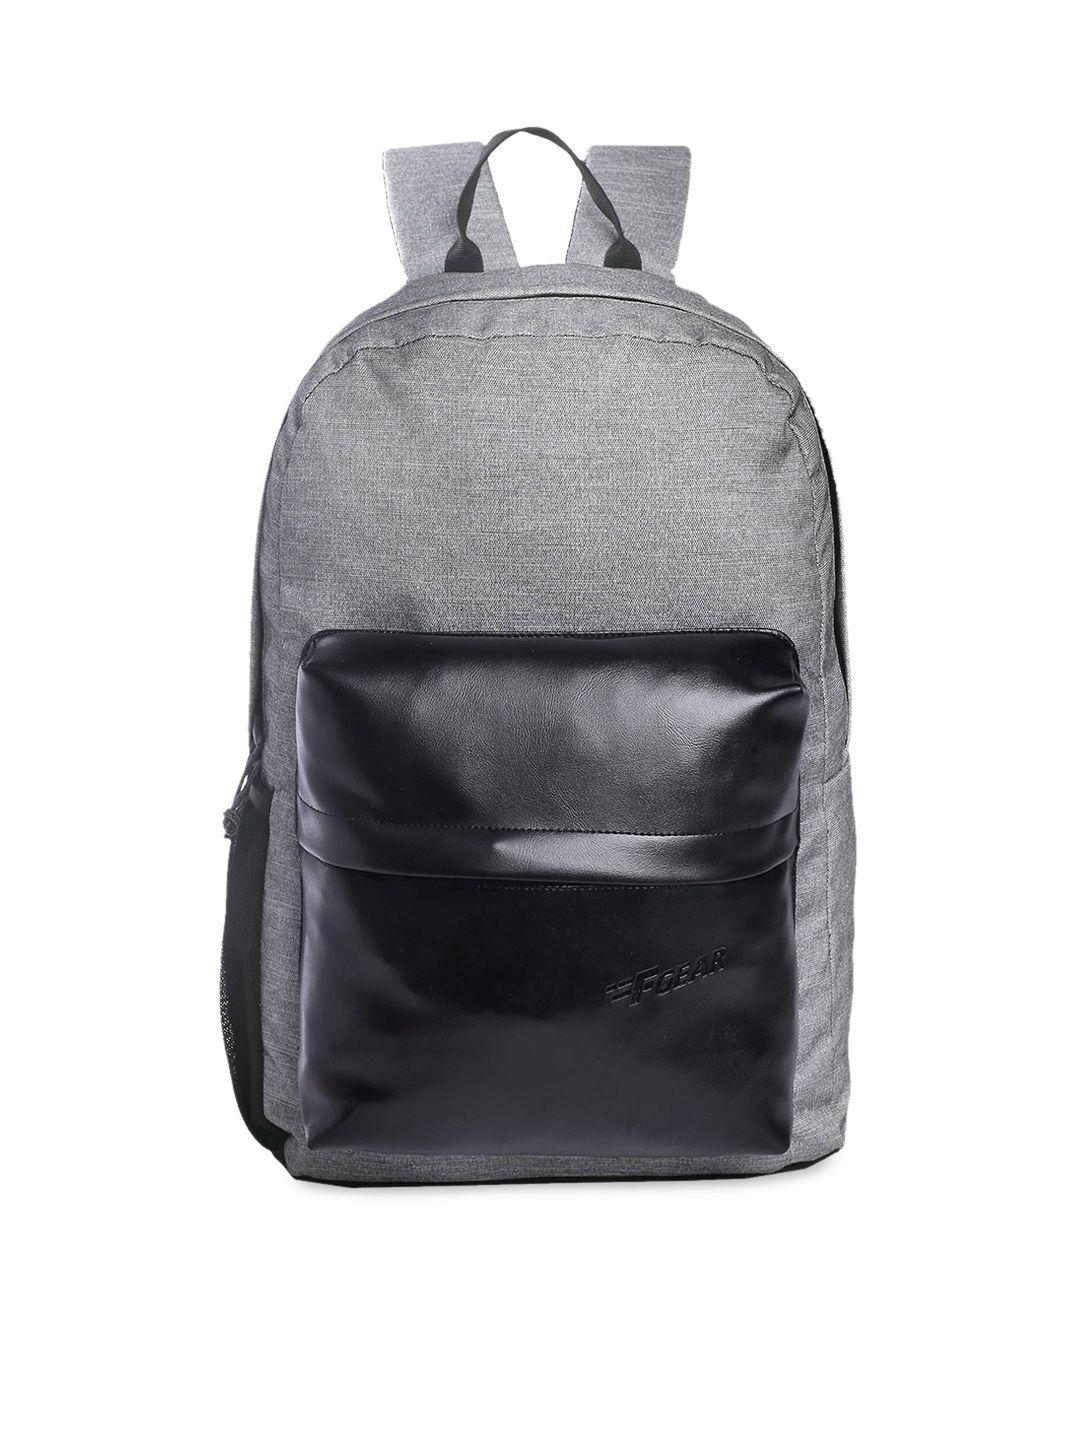 f gear unisex grey & black colourblocked backpack